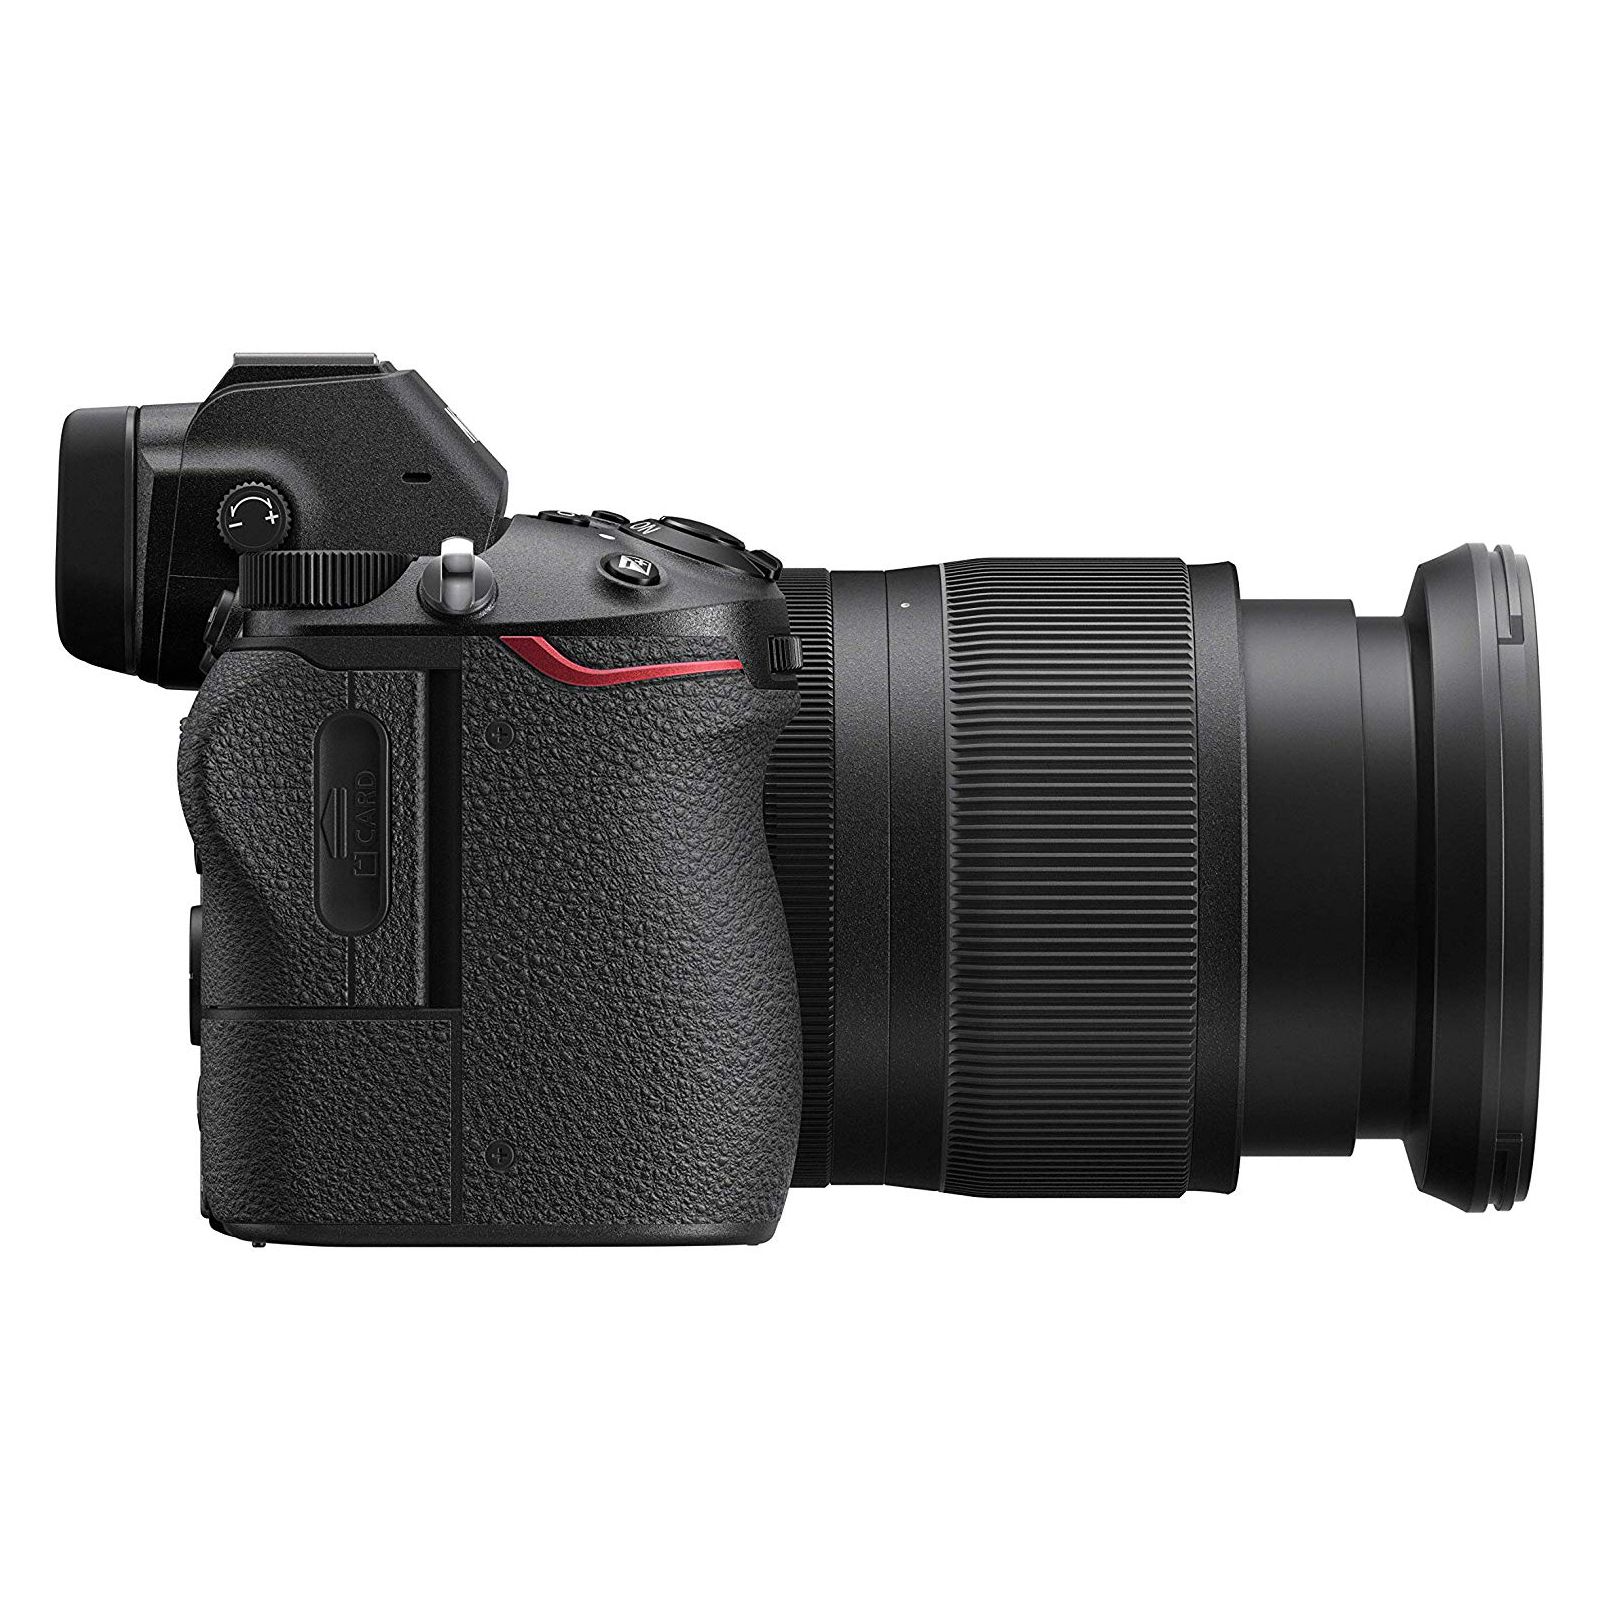 Nikon Z 7 | 45.7 MP 4K Video Mirrorless DSLR | Best Camera for 2019